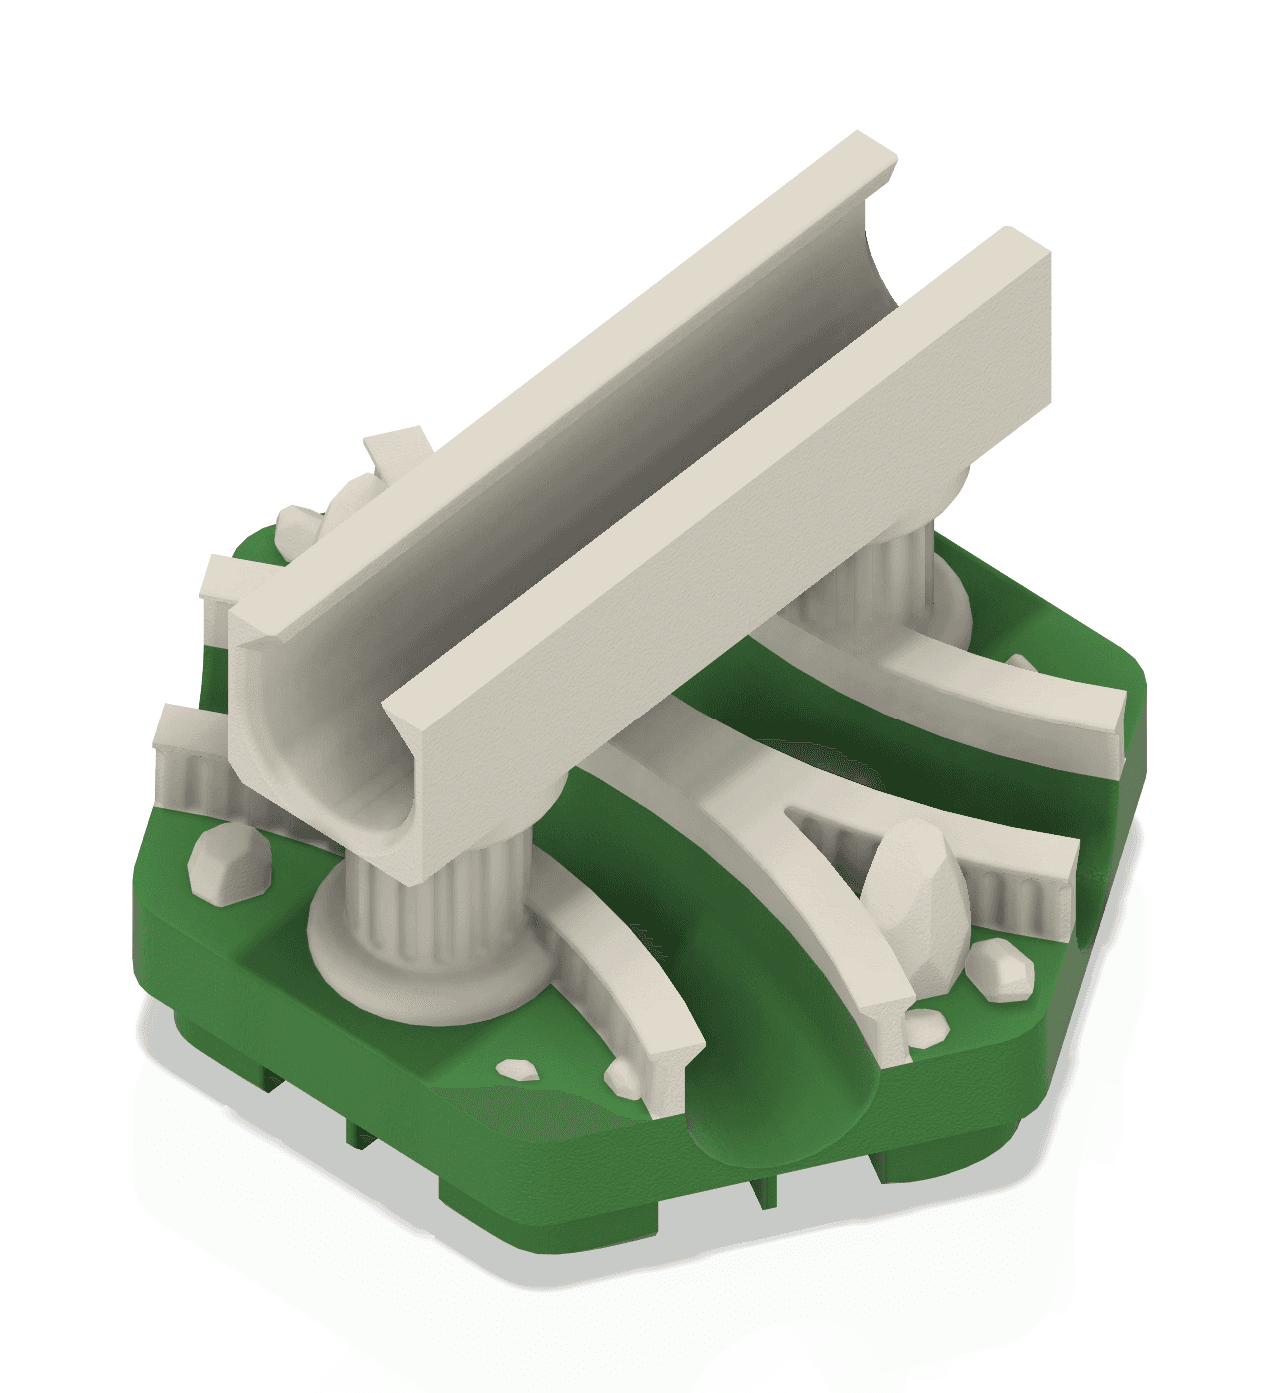 Hextraction - Aqueduct I-Tile with Roman column sideguards 3d model